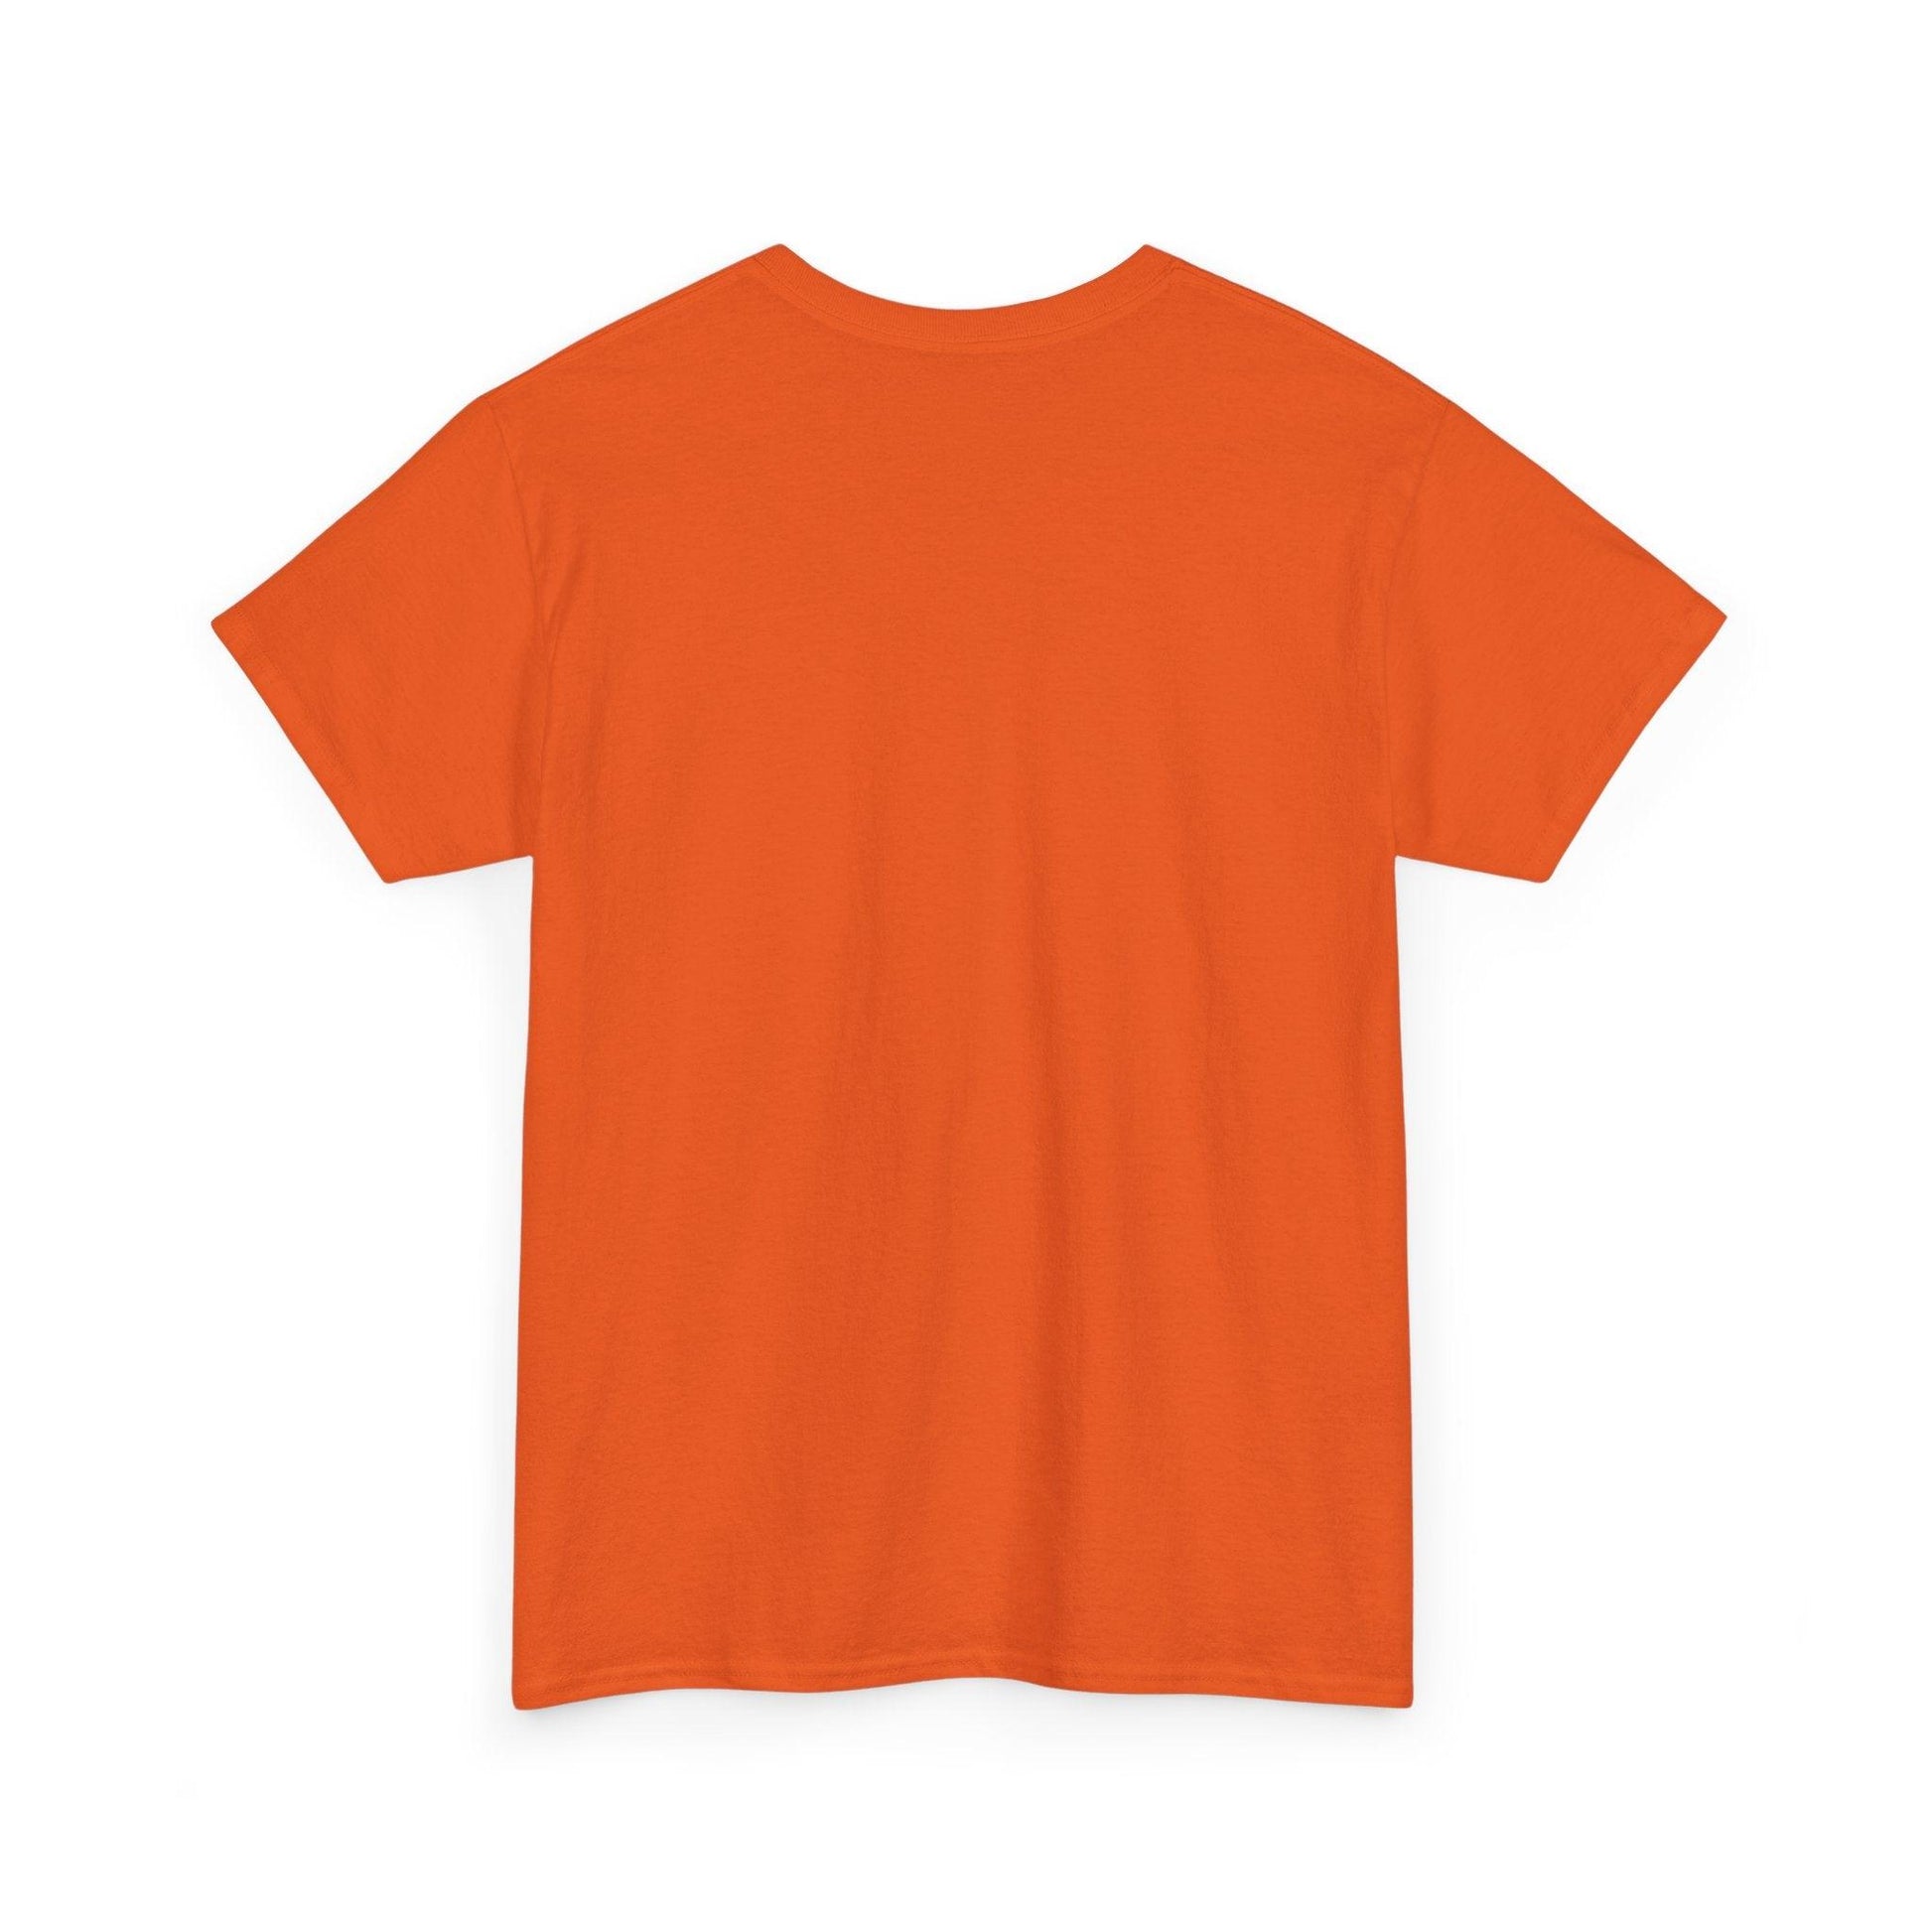 Rock & Roll Rock Star Unisex Heavy Cotton Tee - Premium T-Shirt from Printify - Just $24.06! Shop now at Lizard Vigilante